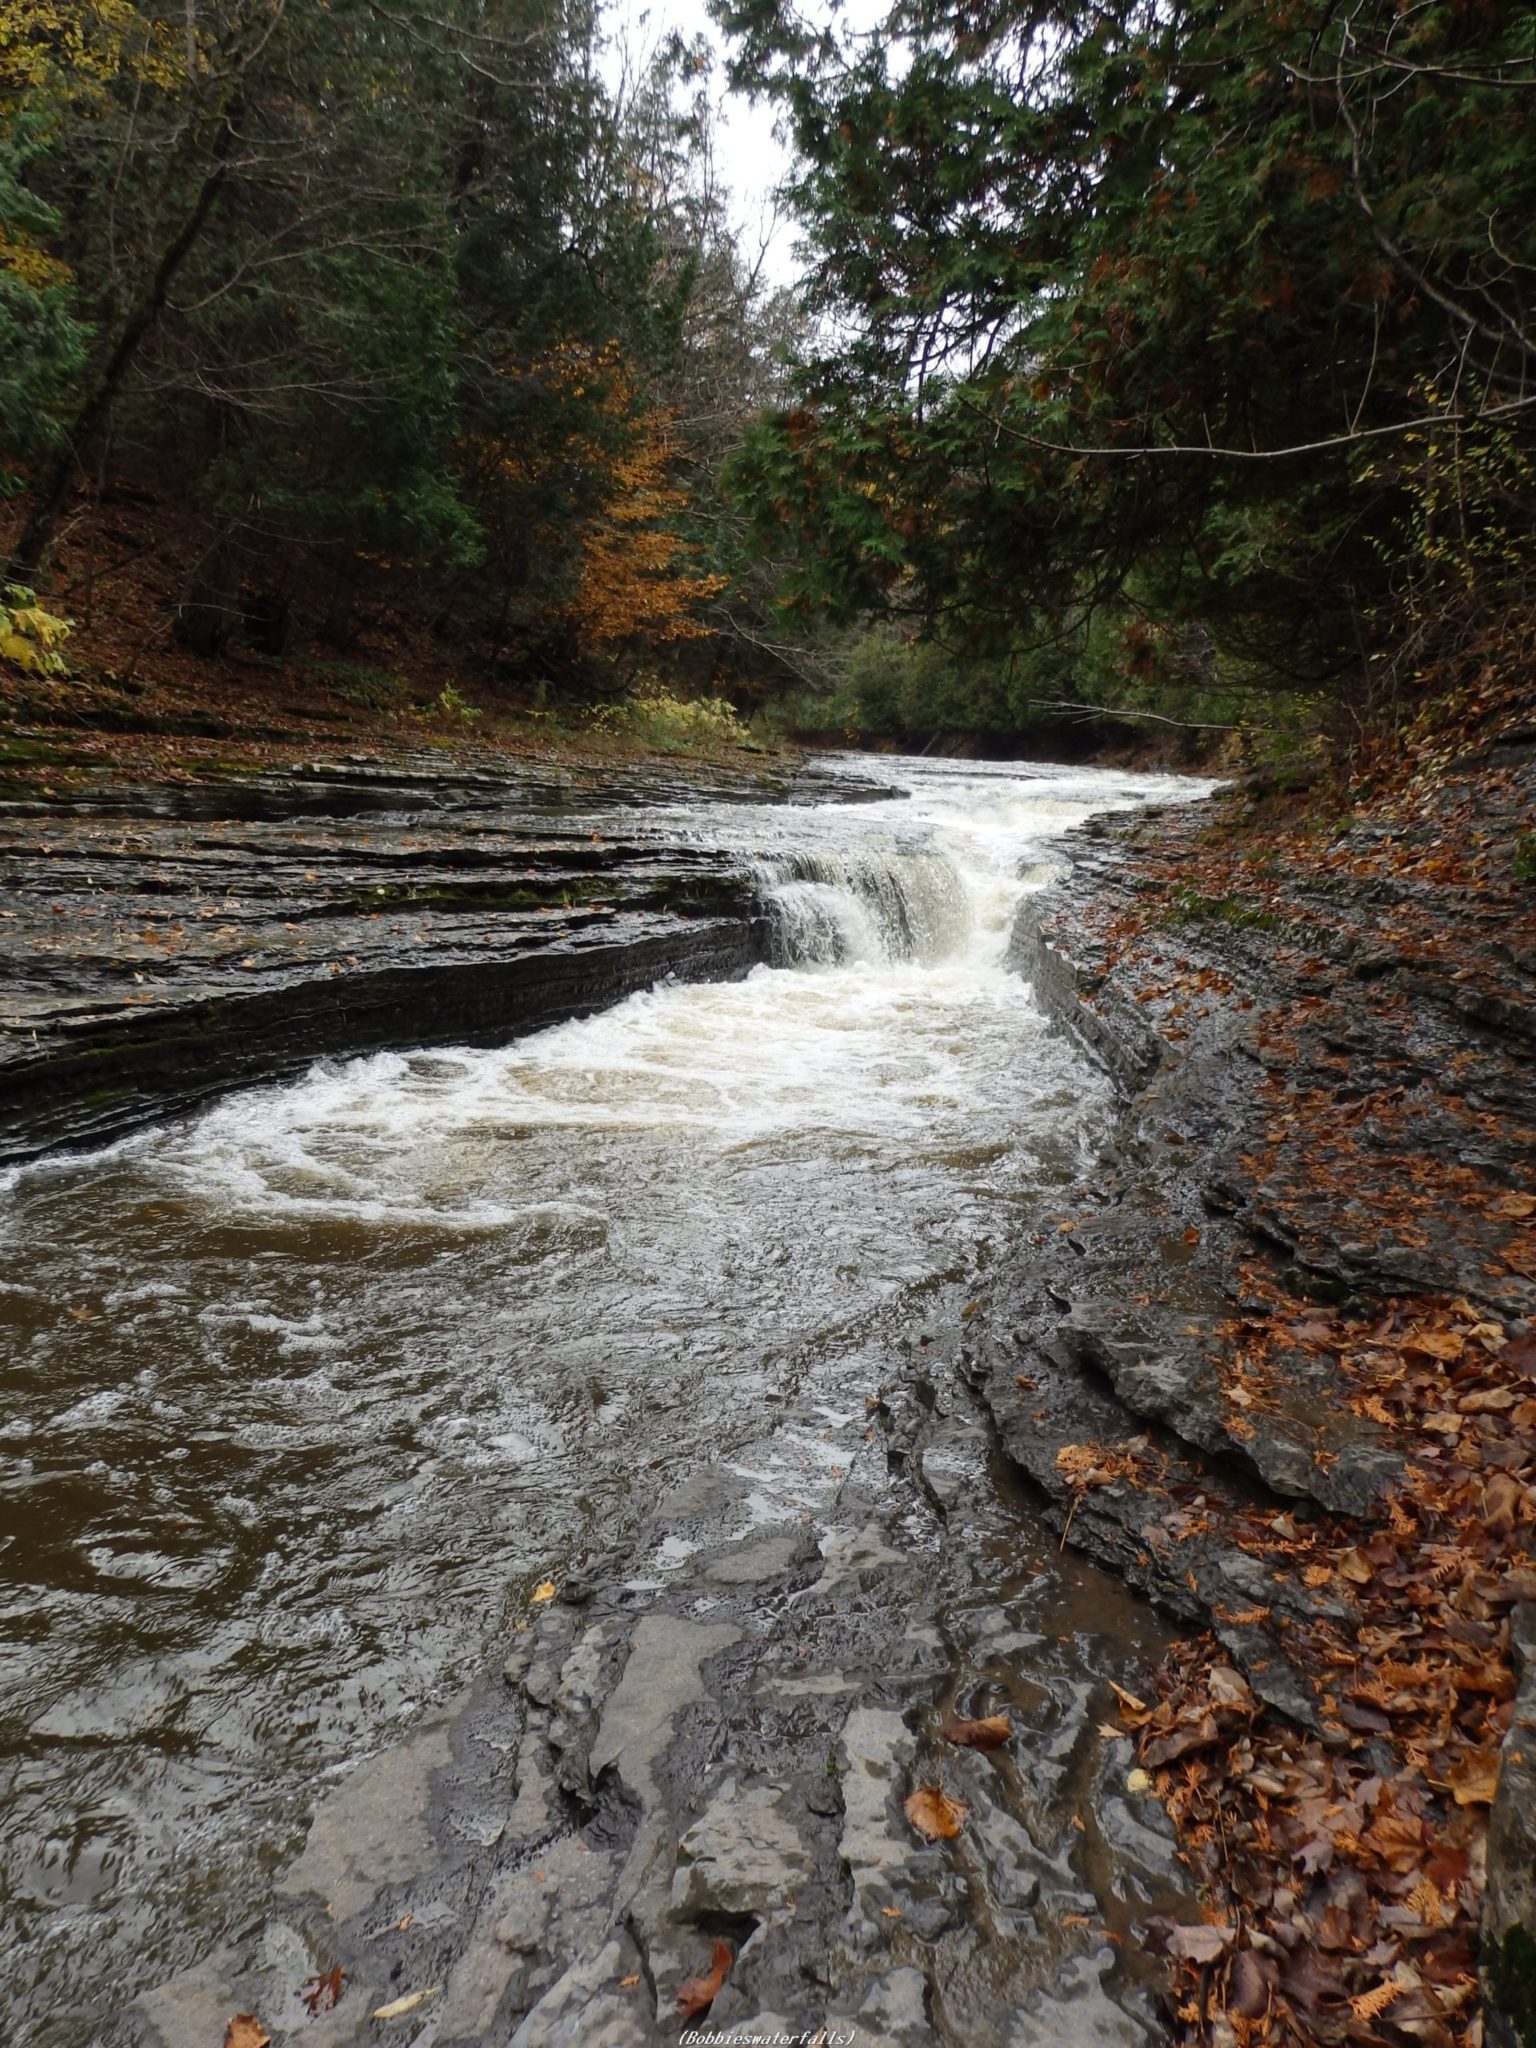 Whiteman Gully Lower Falls – Dansville, Steuben